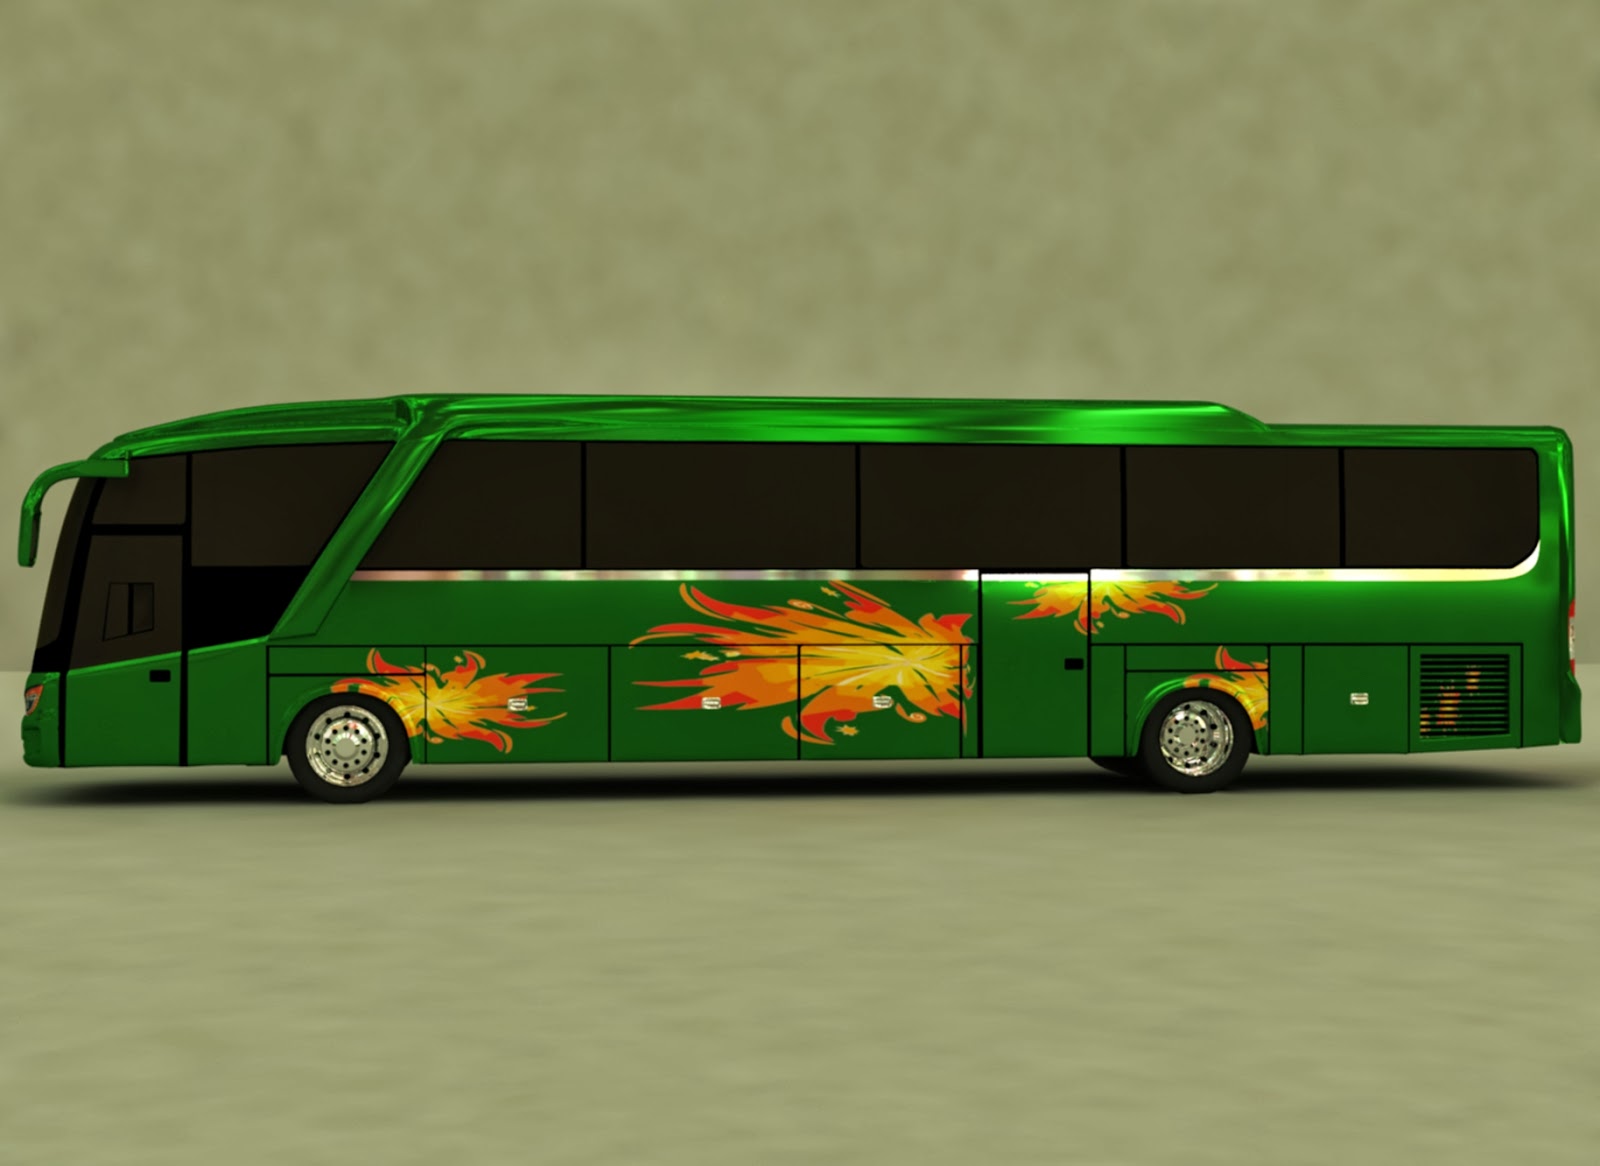 Design 3D Beat Bus